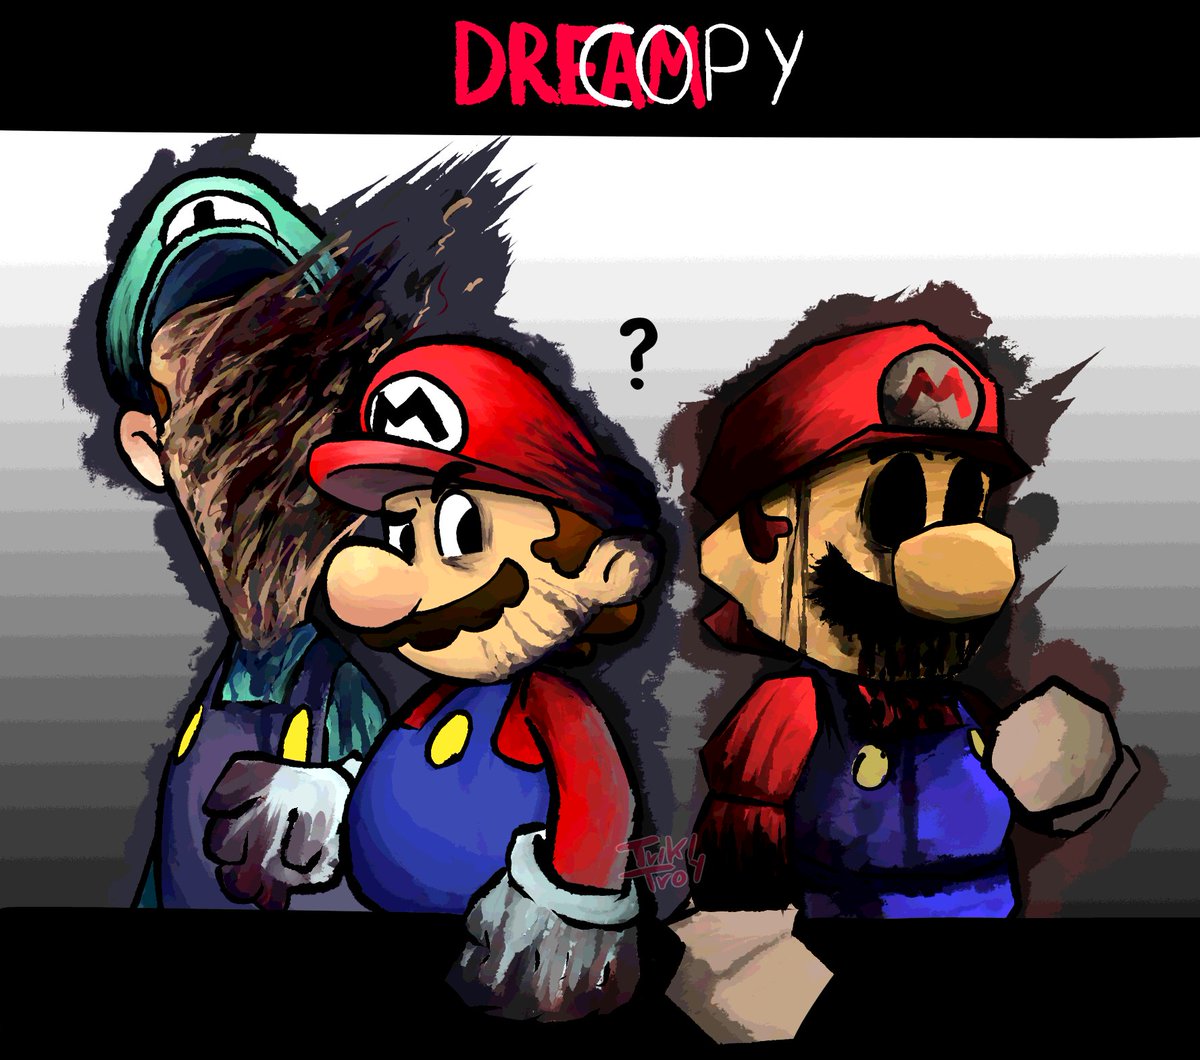 DREAM COPY - Mario Dream Team x C-N64 [Cross]

'Oh who its this Poly Red one looks a little bit weird'

C-N64 its by @korean_nooby and @WassabiSoja 
#SuperMarioBros #MarioDTHorror #marioexe #CreepyPasta #digitalart